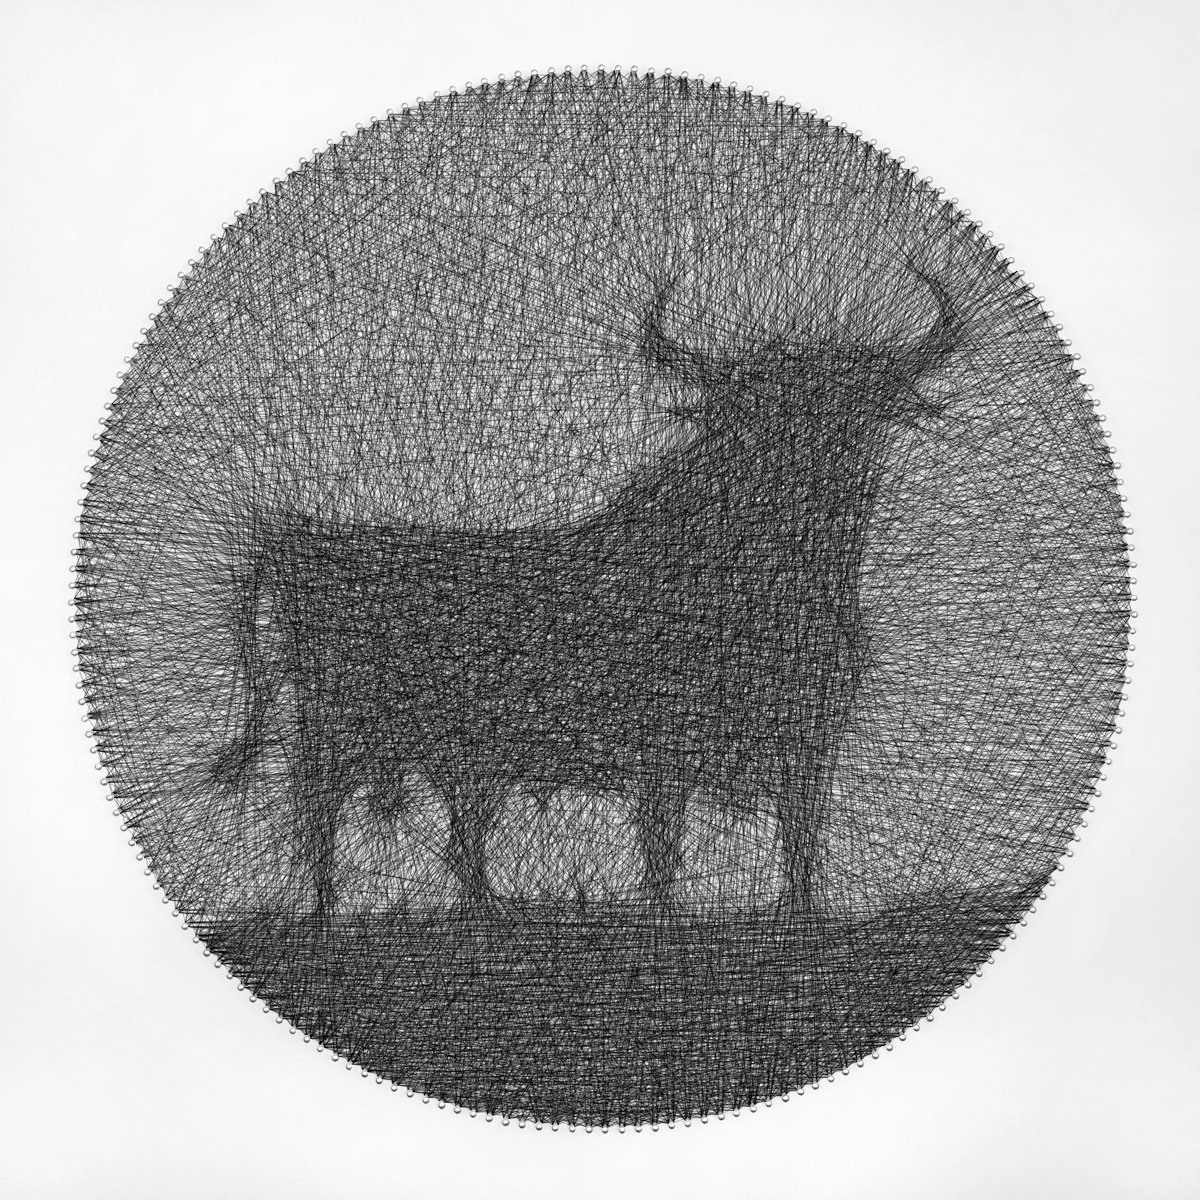 Taurus String Art / Bull Silhouette by Andrey Saharov